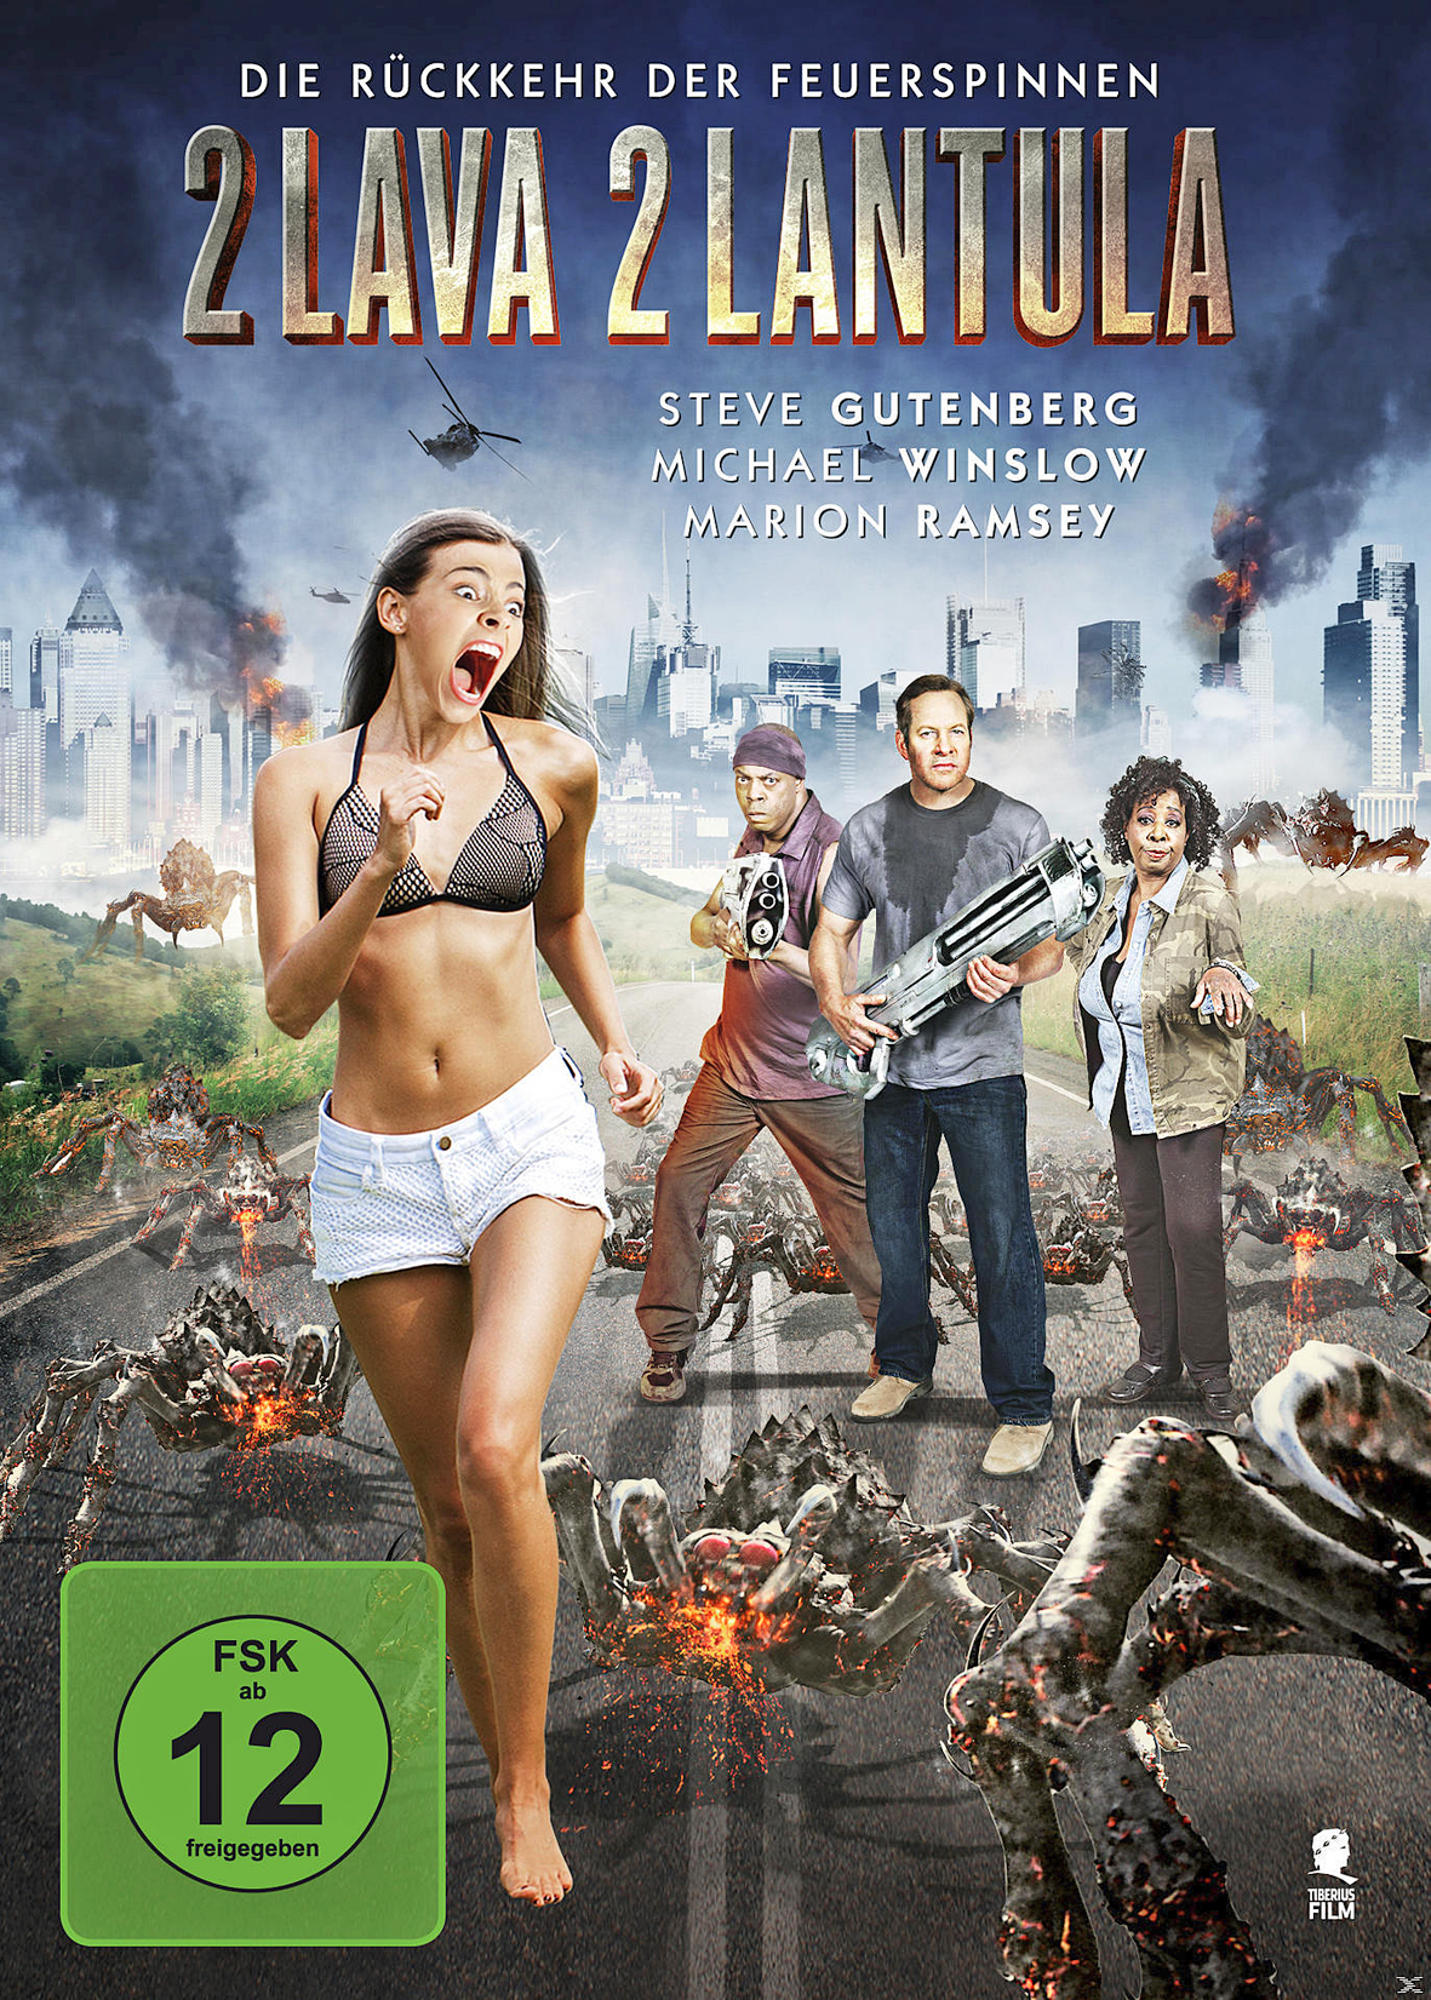 Lantula Lava DVD 2 2